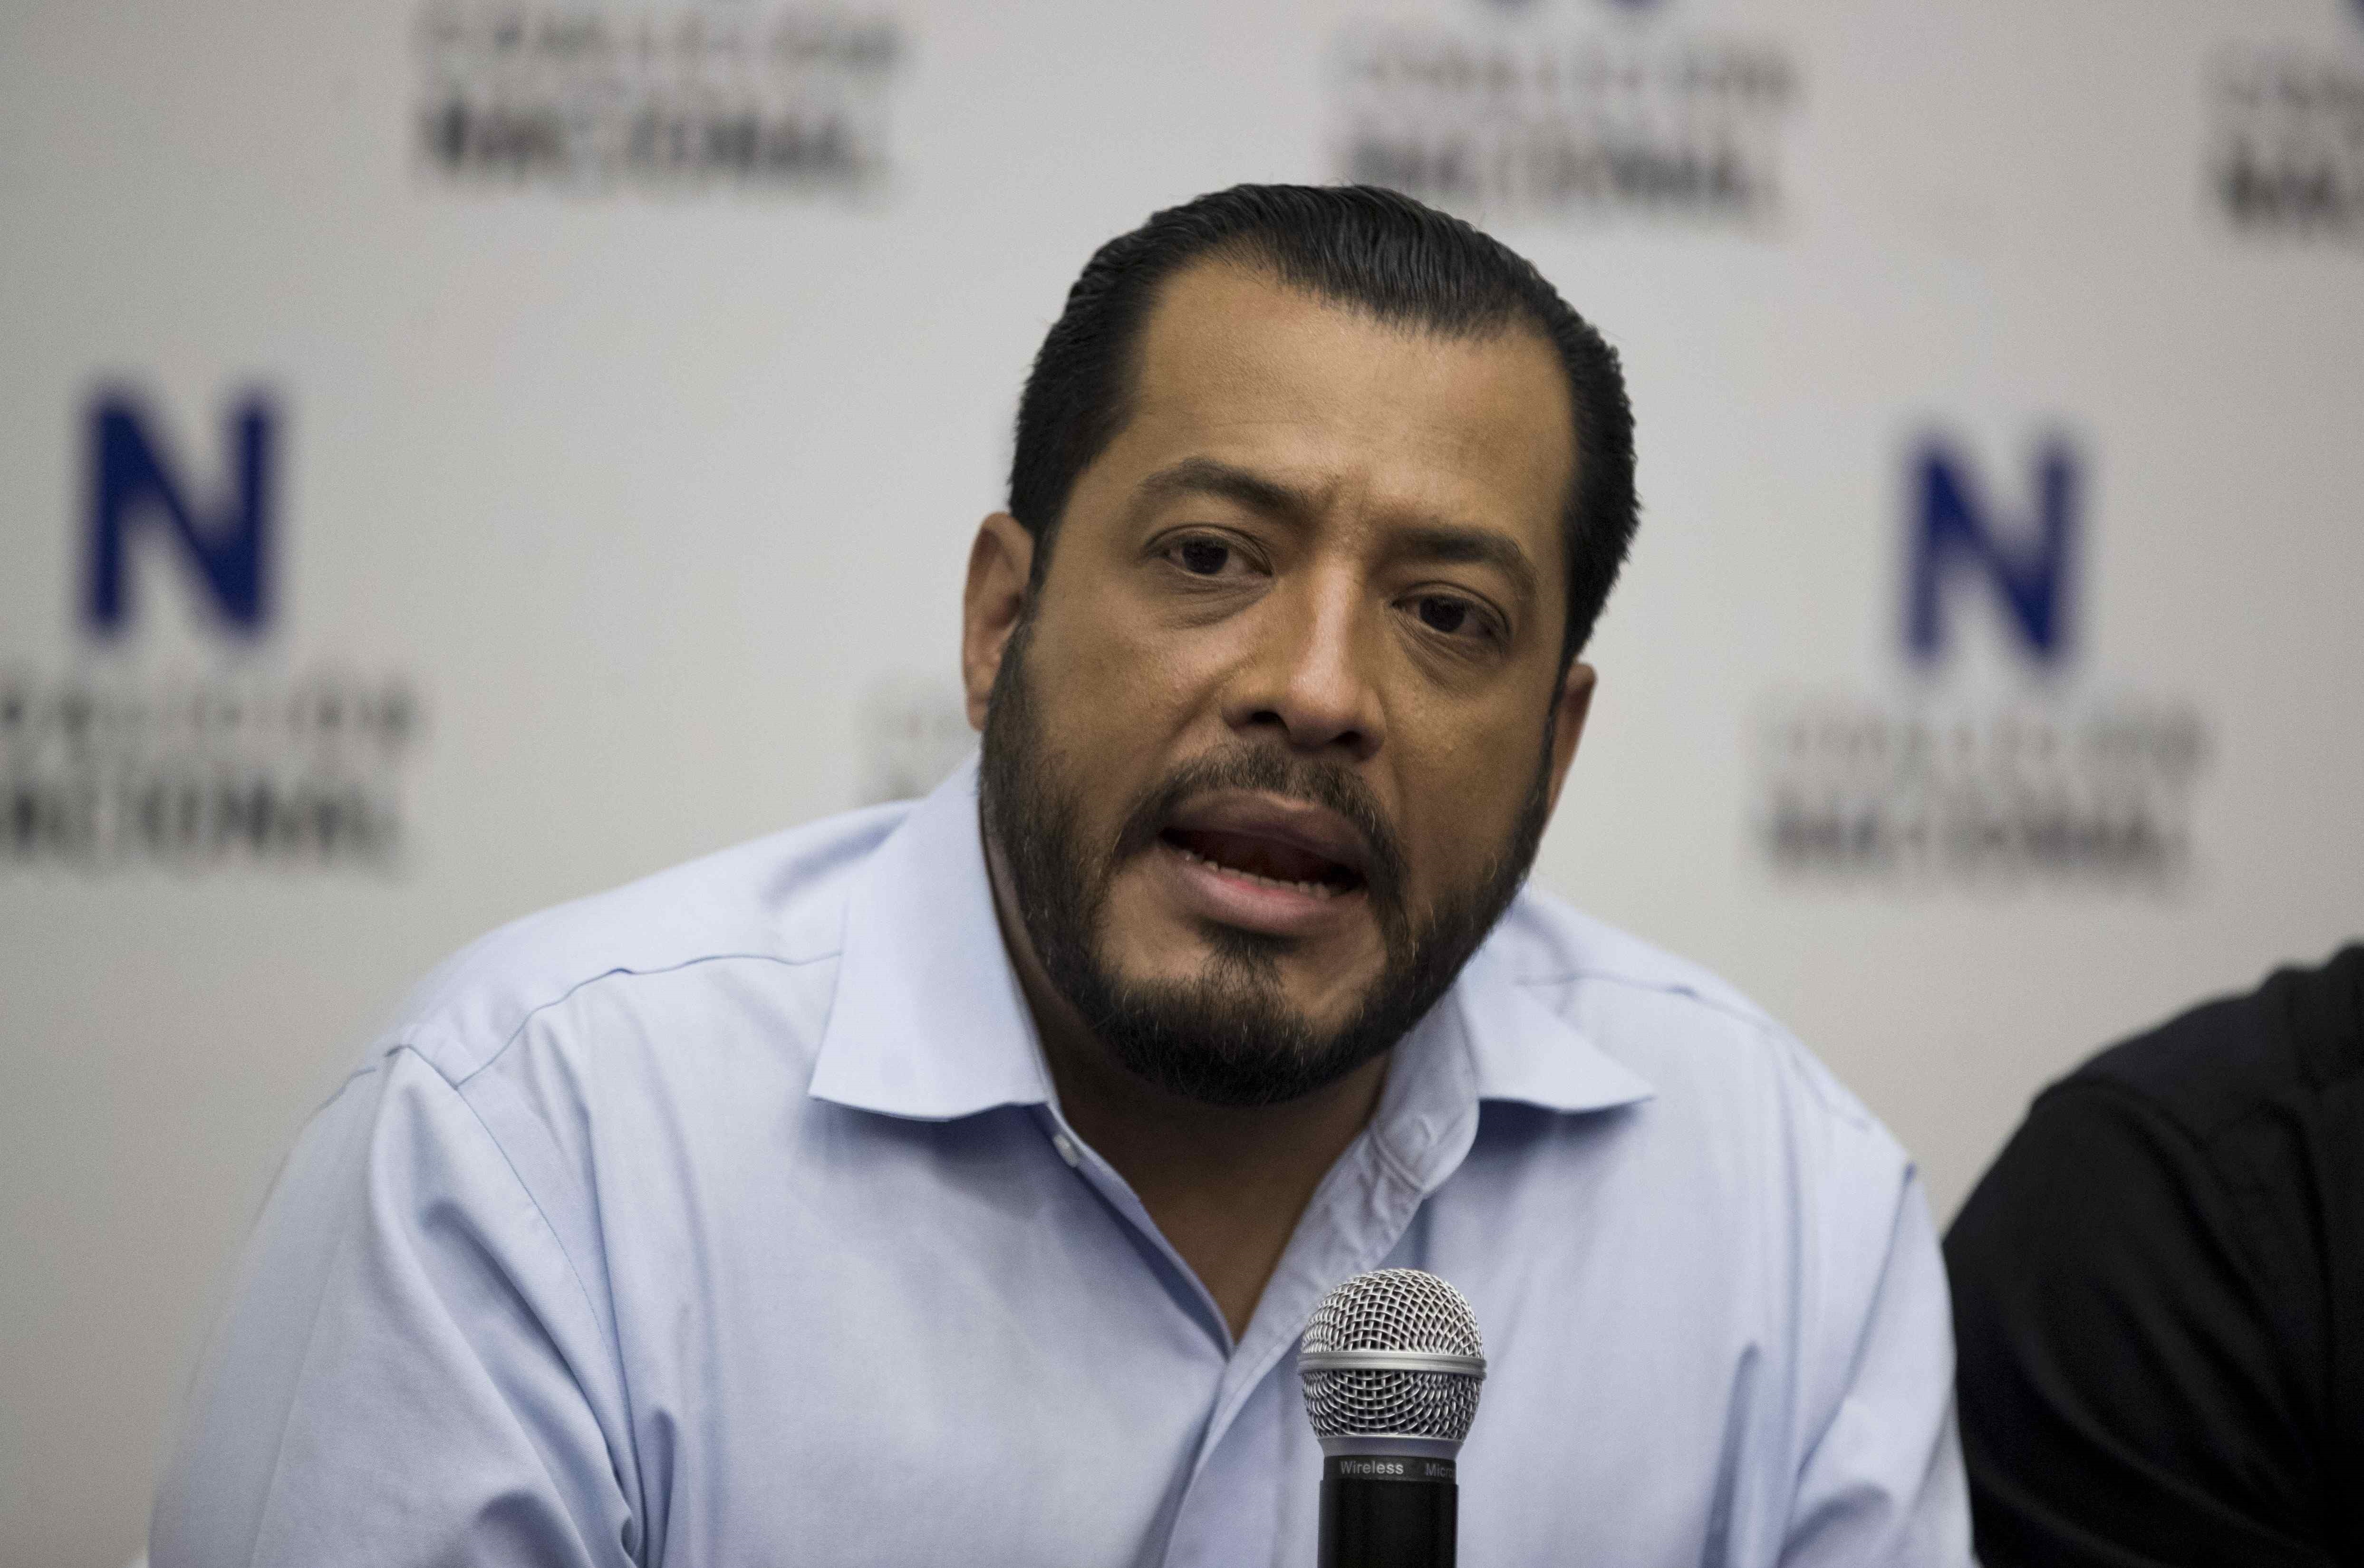 El aspirante a la presidencia de Nicaragua Felix Maradiaga participa de una conferencia de prensa en Managua (Nicaragua) (Foto: EFE/Jorge Torres)